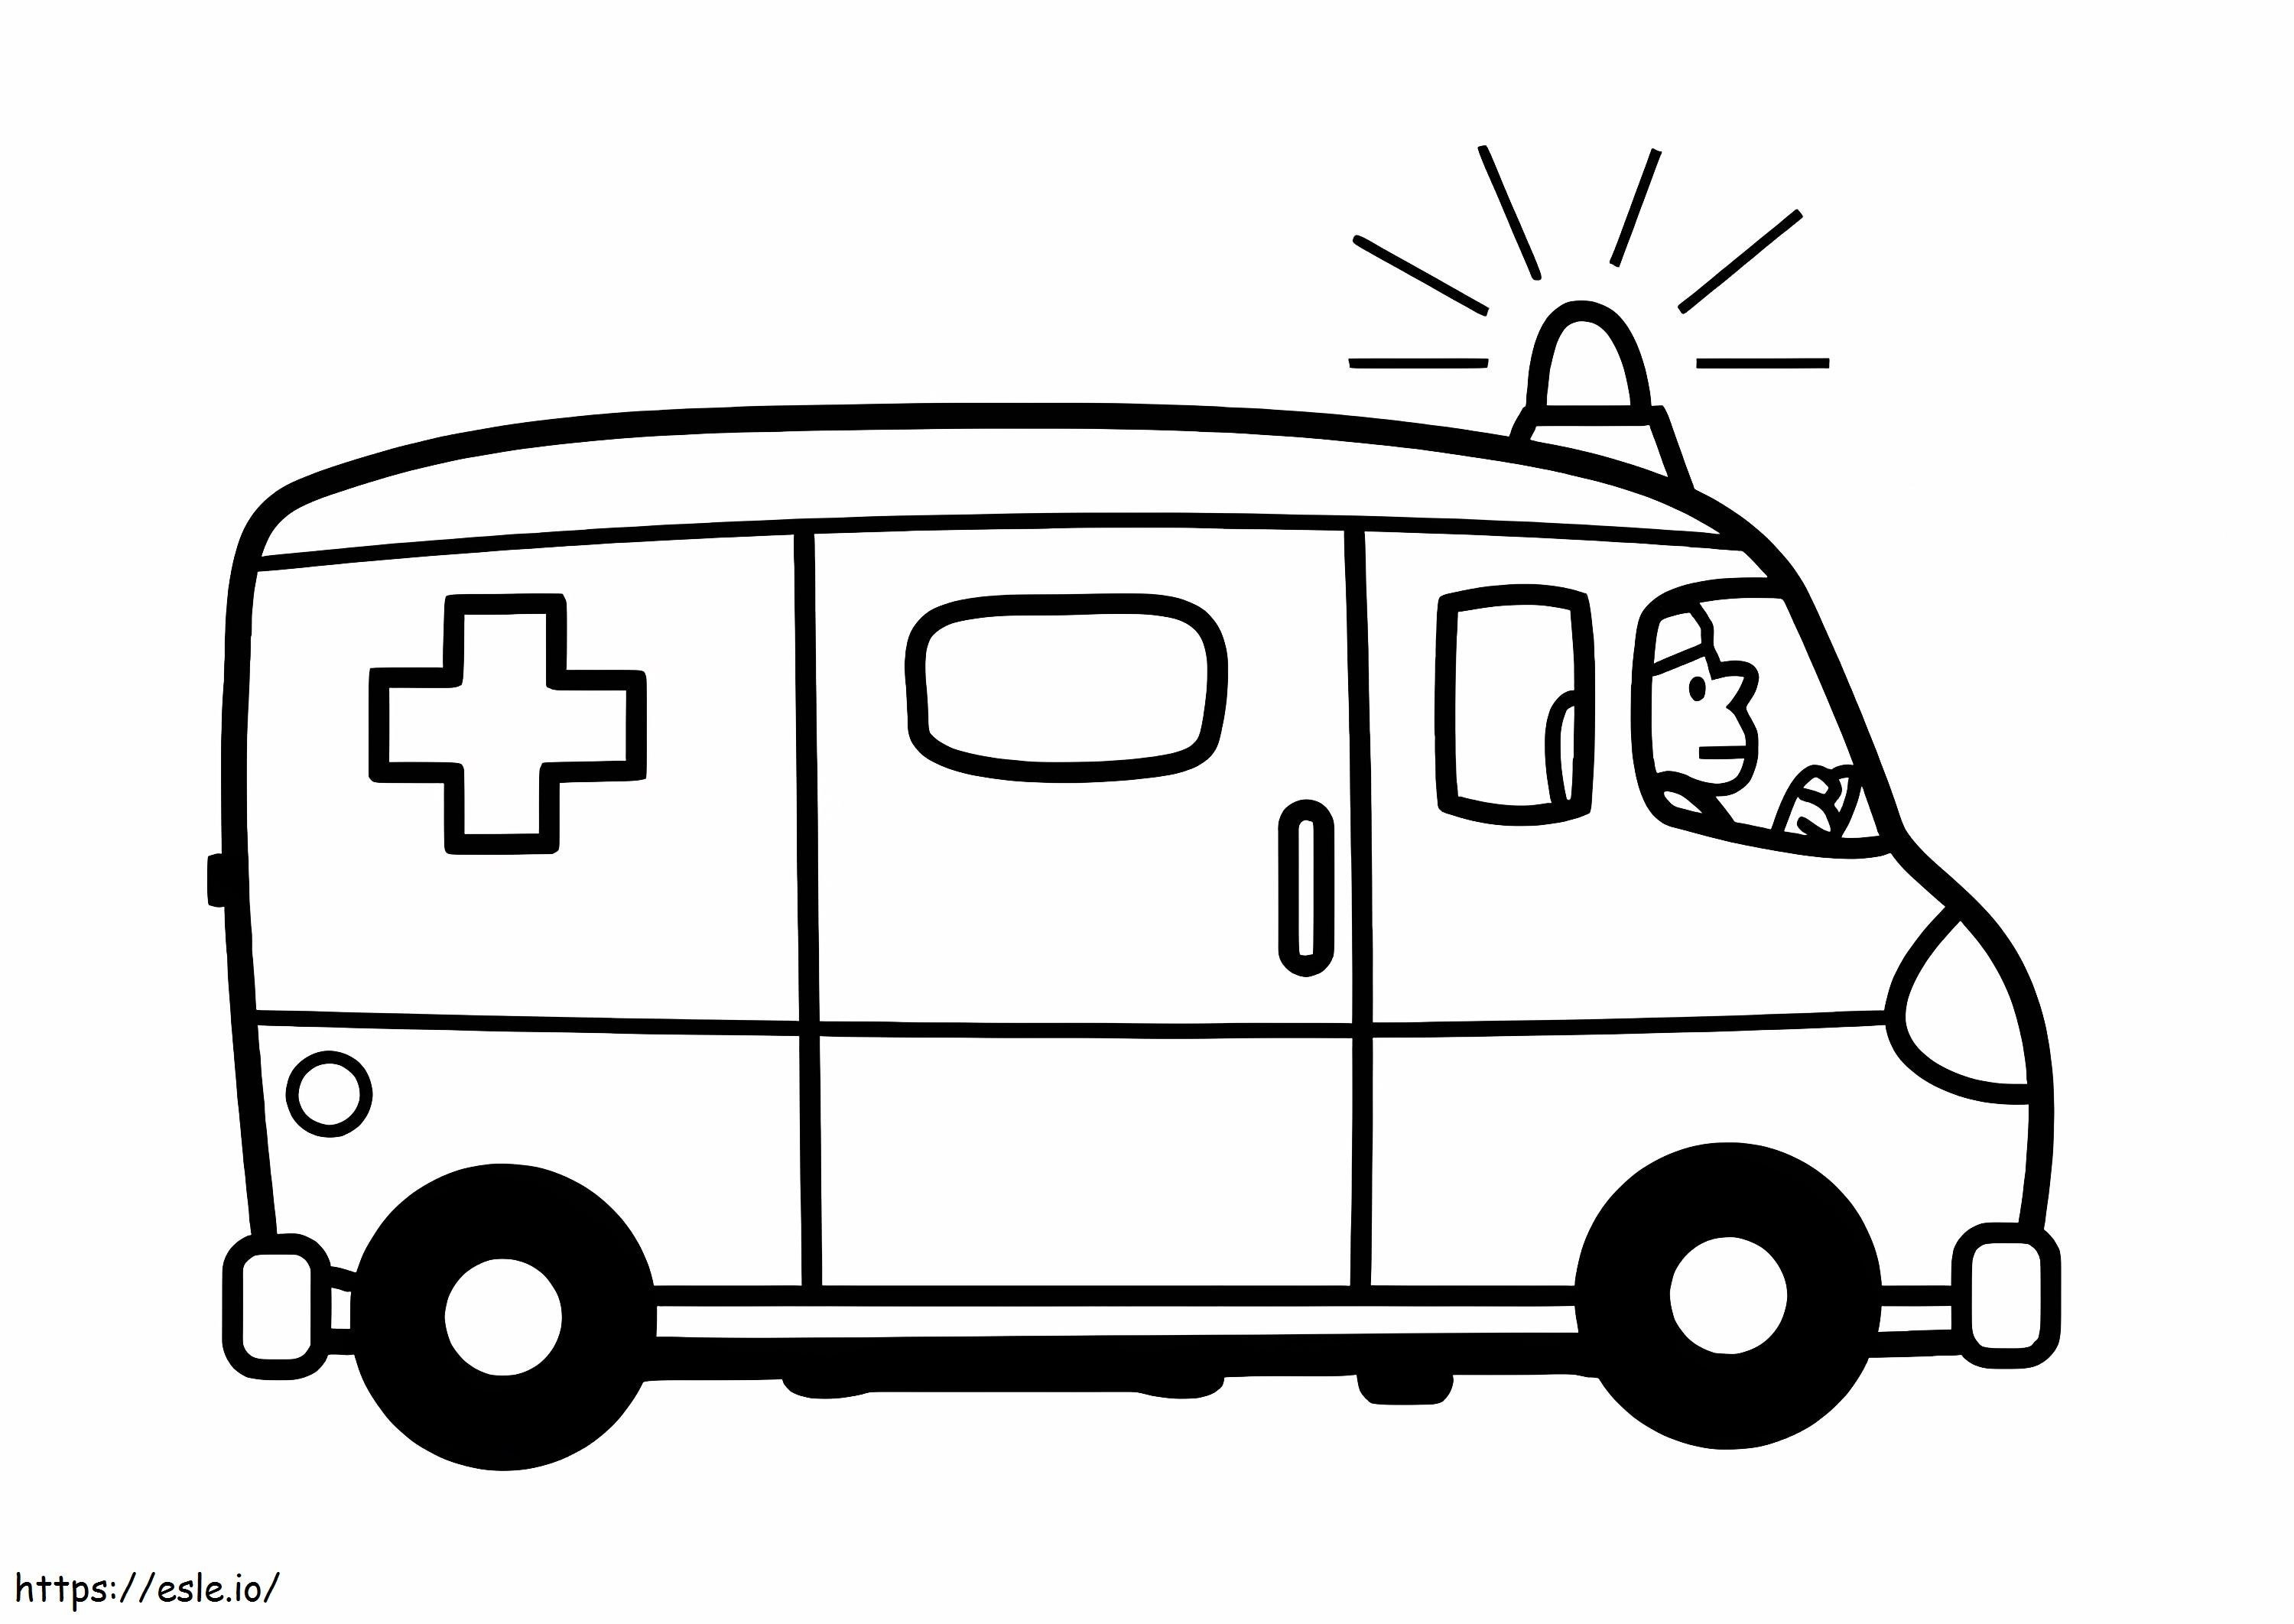 Ambulansı Kullanan Adam boyama